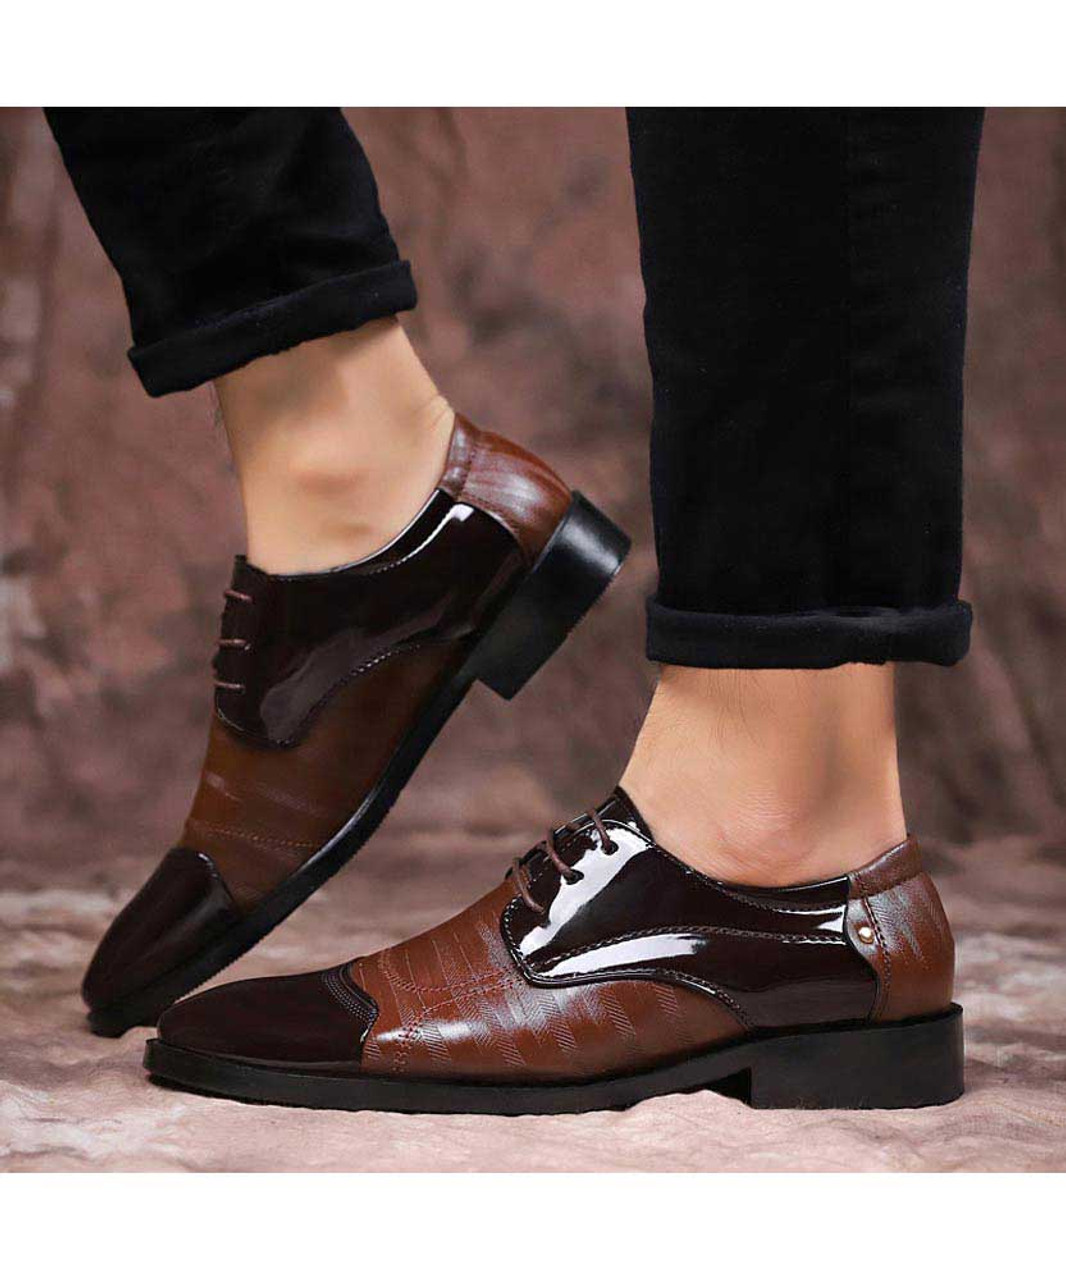 Brown stripe texture leather derby dress shoe | Mens dress shoes online ...